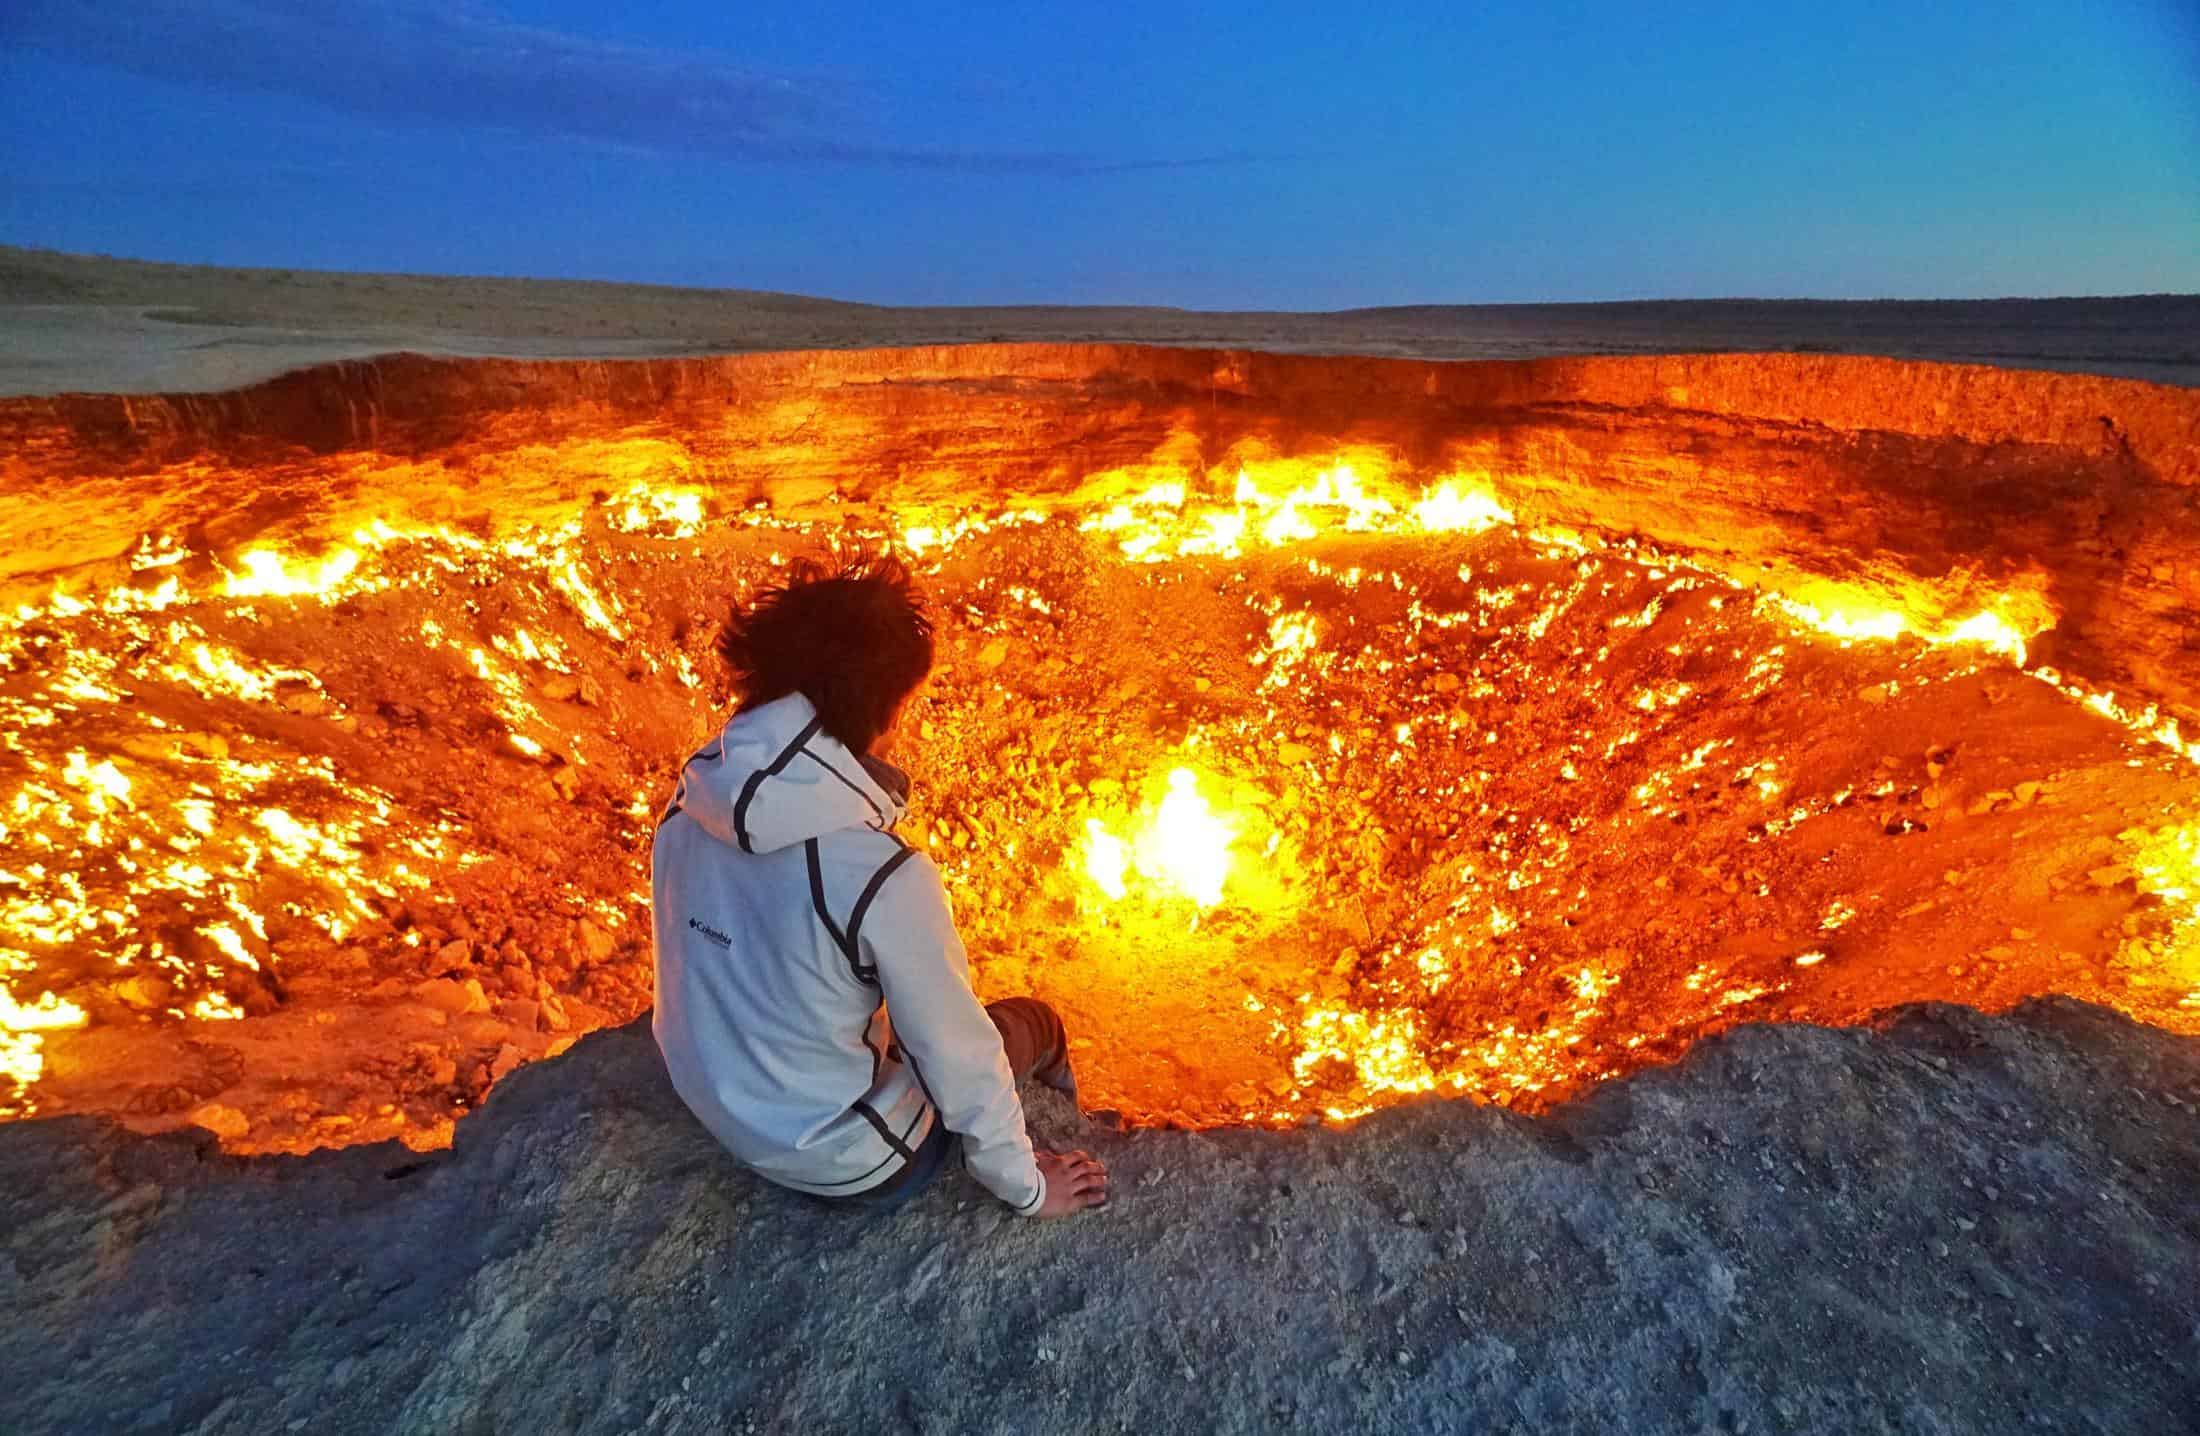 Fire on the hole. "Врата ада" (Дарваза), Туркменистан. Газовый кратер врата ада Туркменистан. Дарваза́ — газовый кратер в Туркмении. "Врата в ад", Дарваза, Туркменистан.